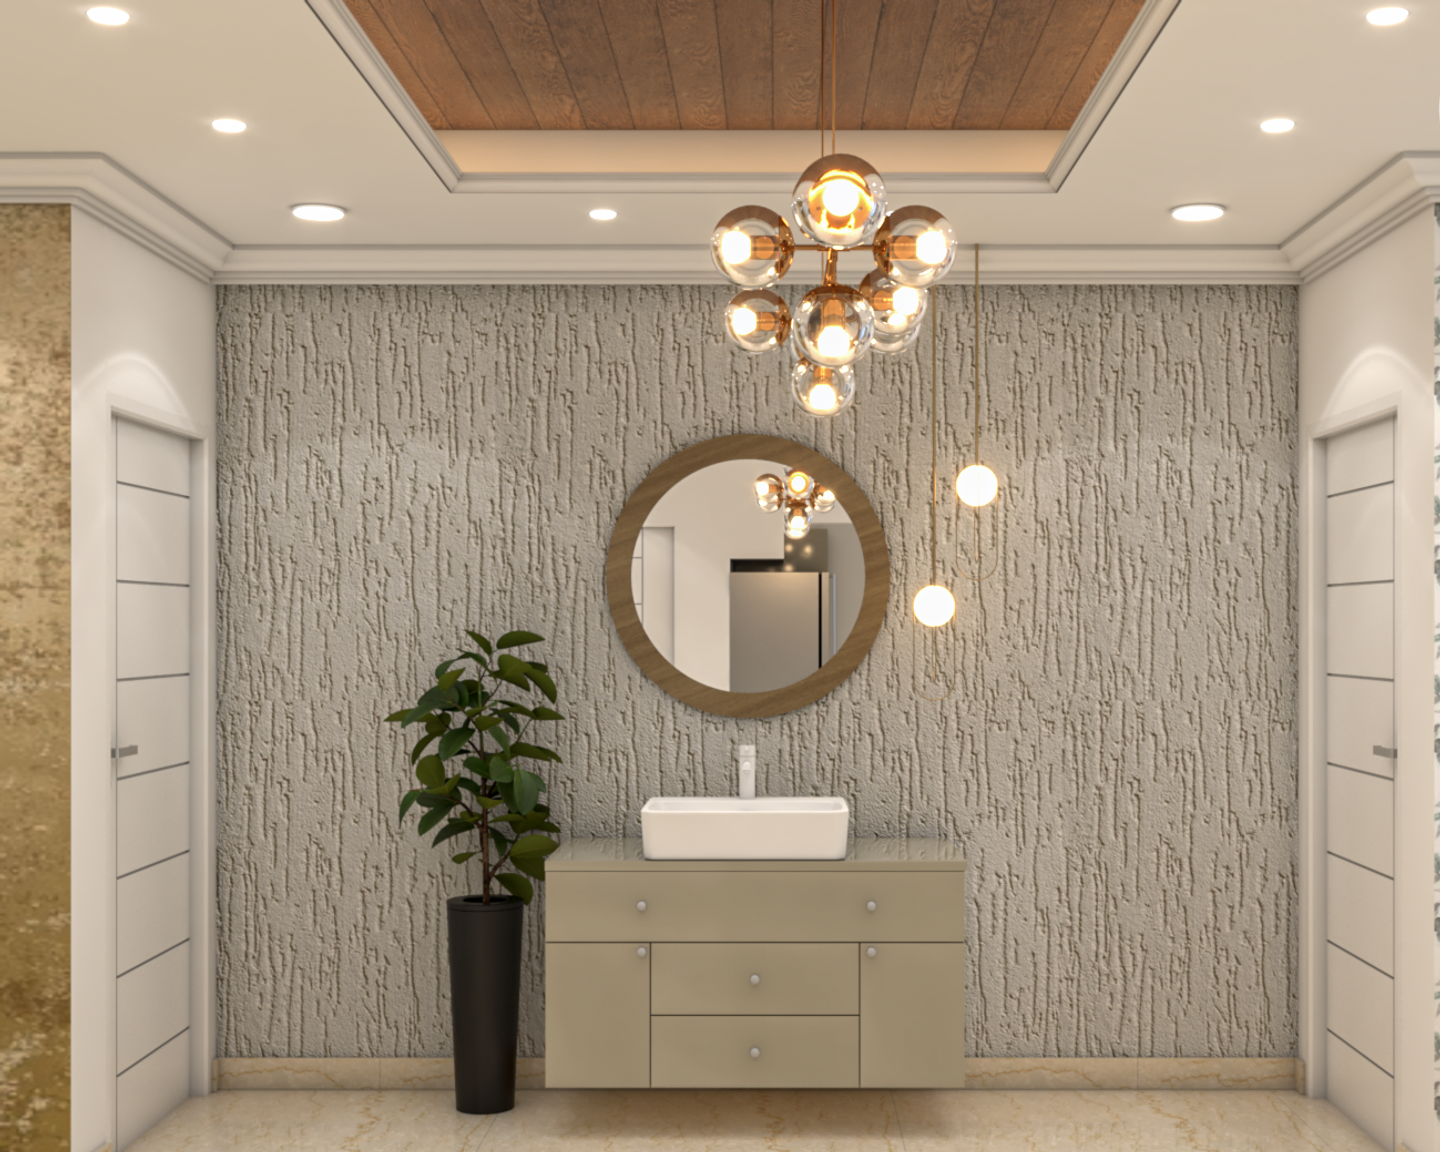 Foyer Design With Chandelier - Livspace